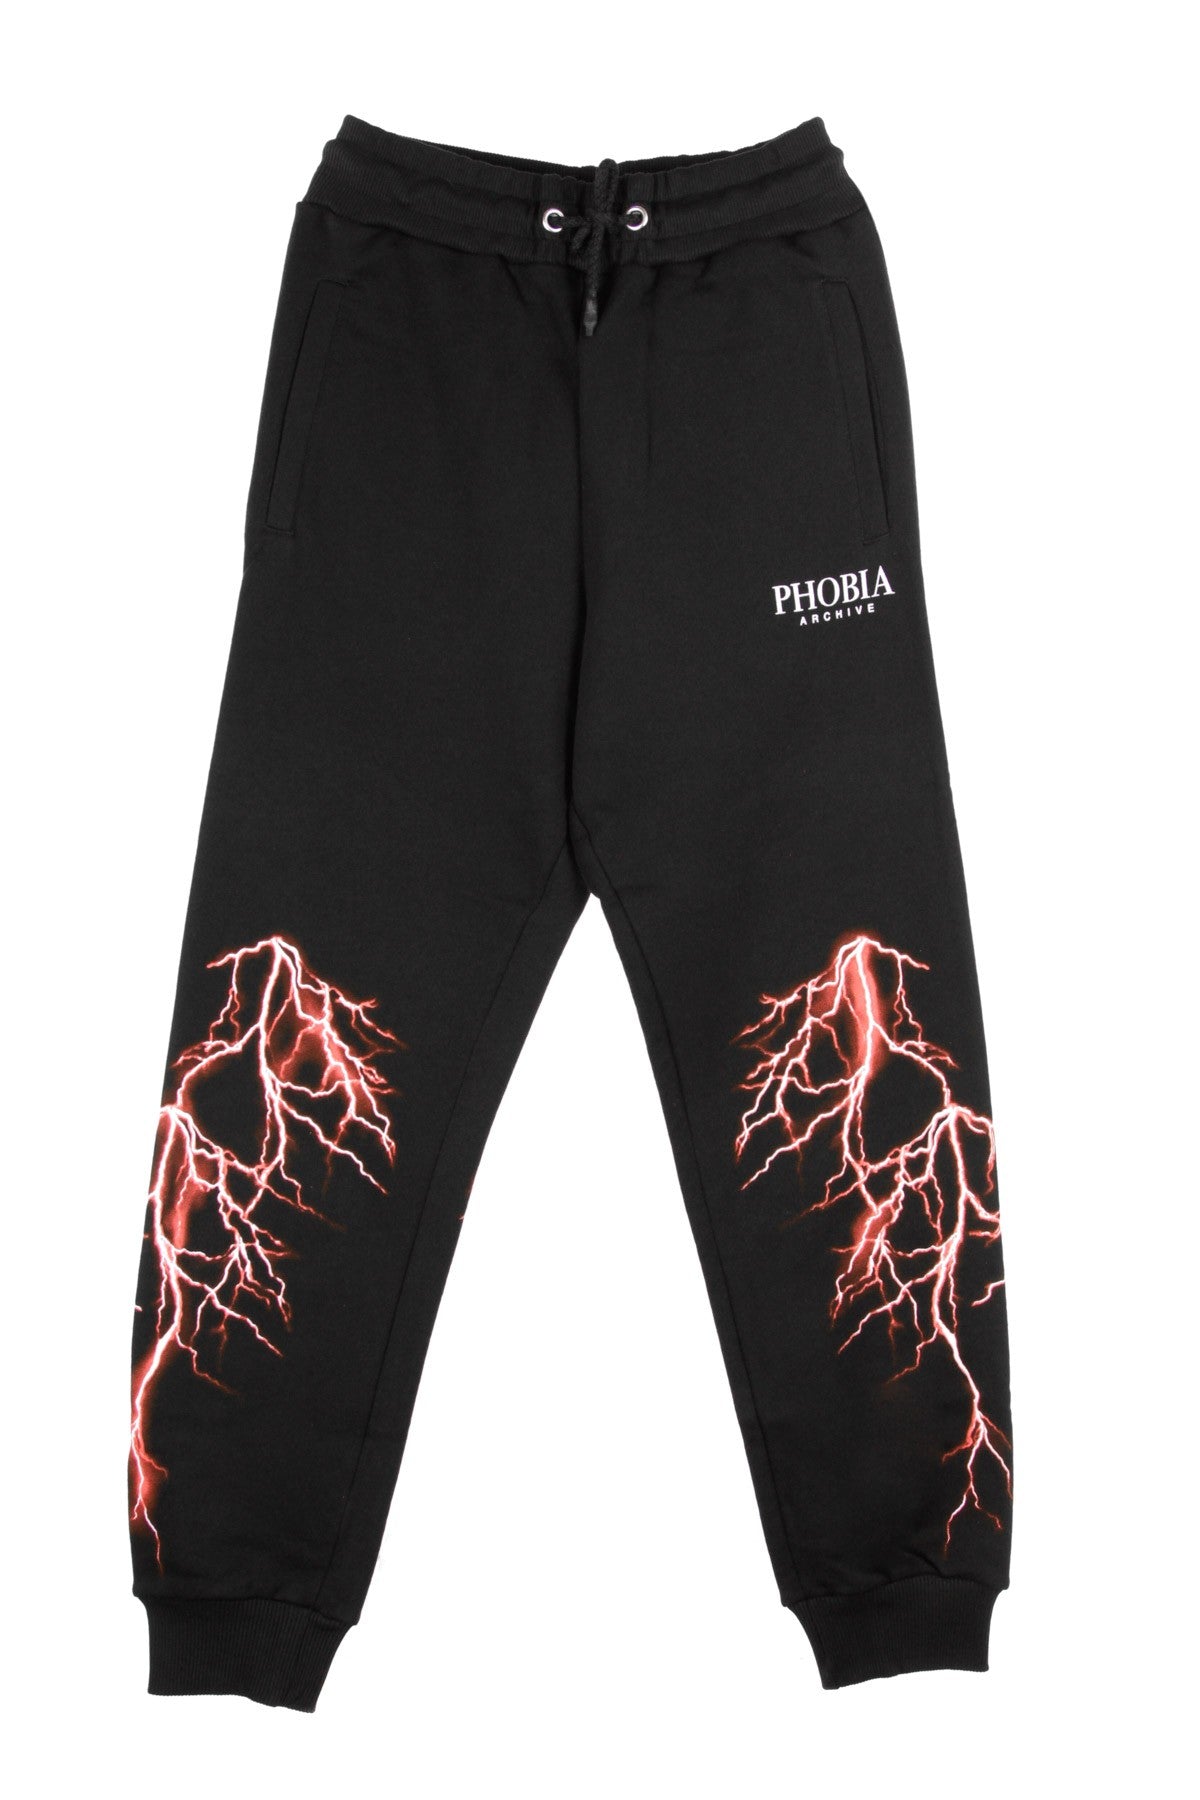 Phobia, Pantalone Tuta Leggero Uomo Red Lightning Pants, Black/red